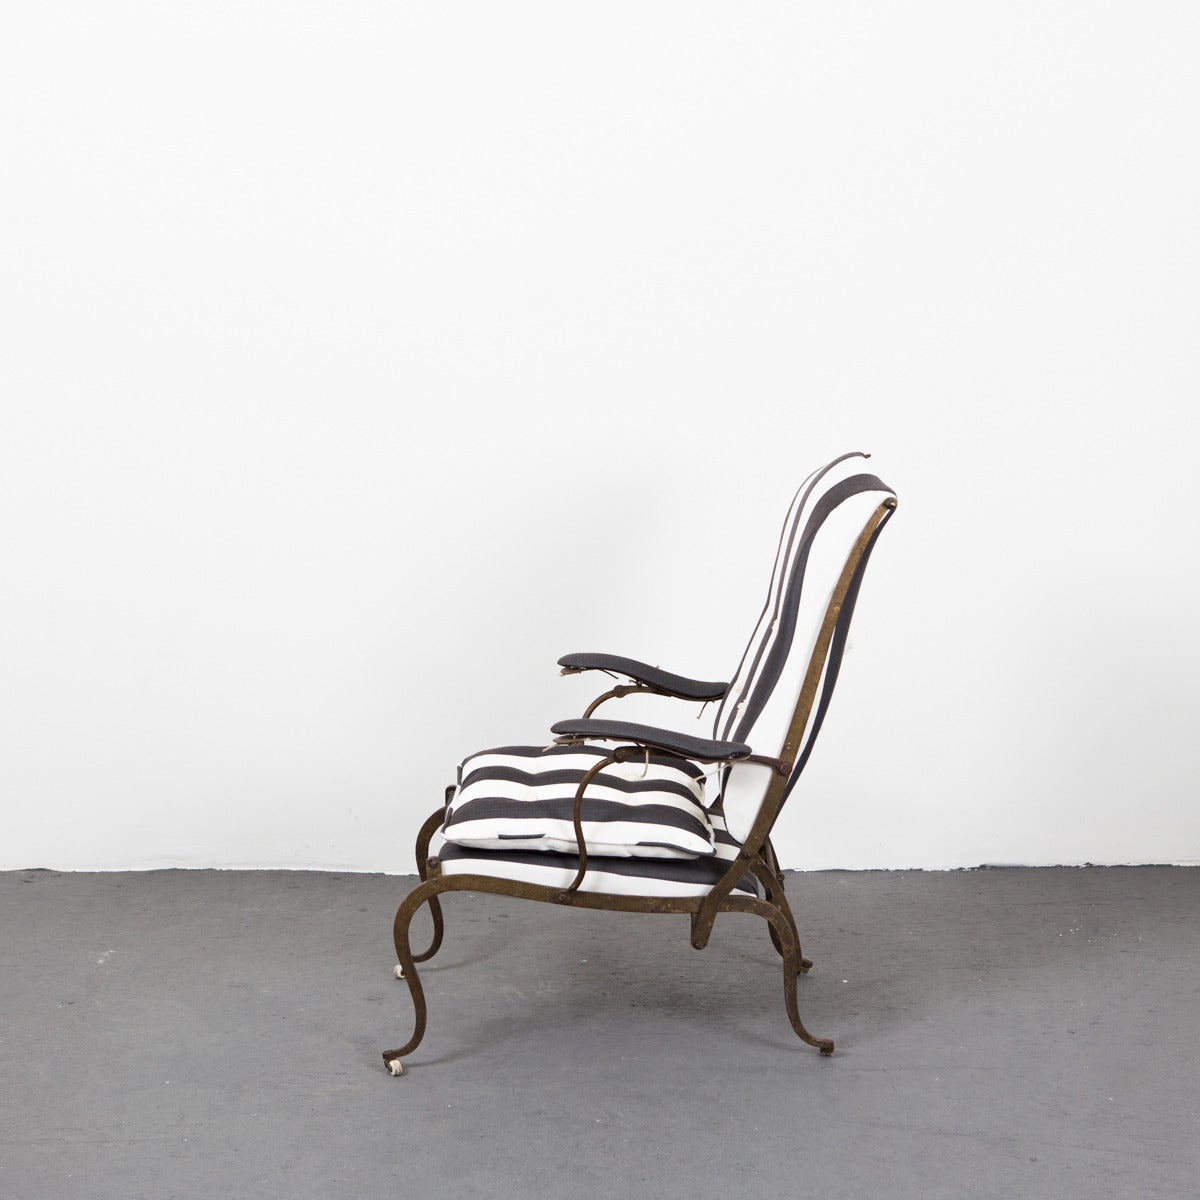 Karl Johan Metal Frame Chair 19th Century